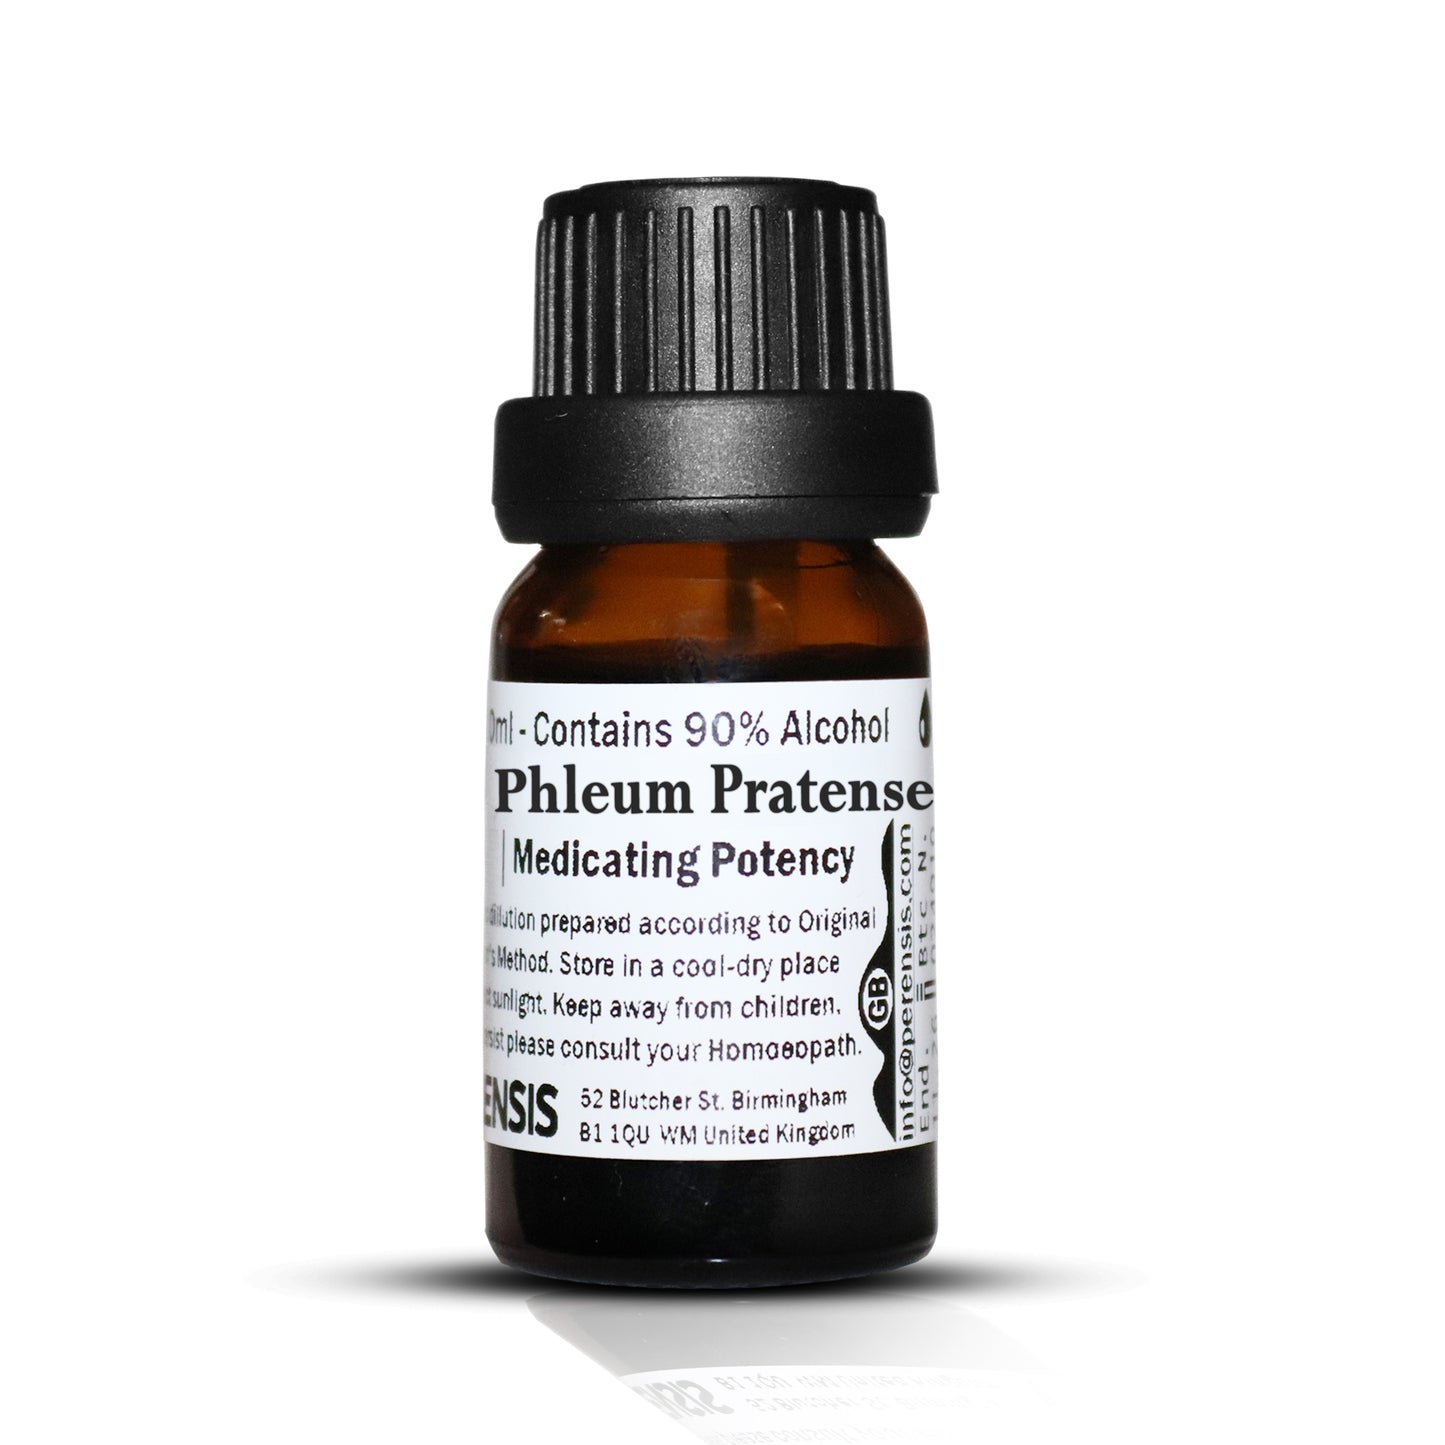 Phleum Pratense